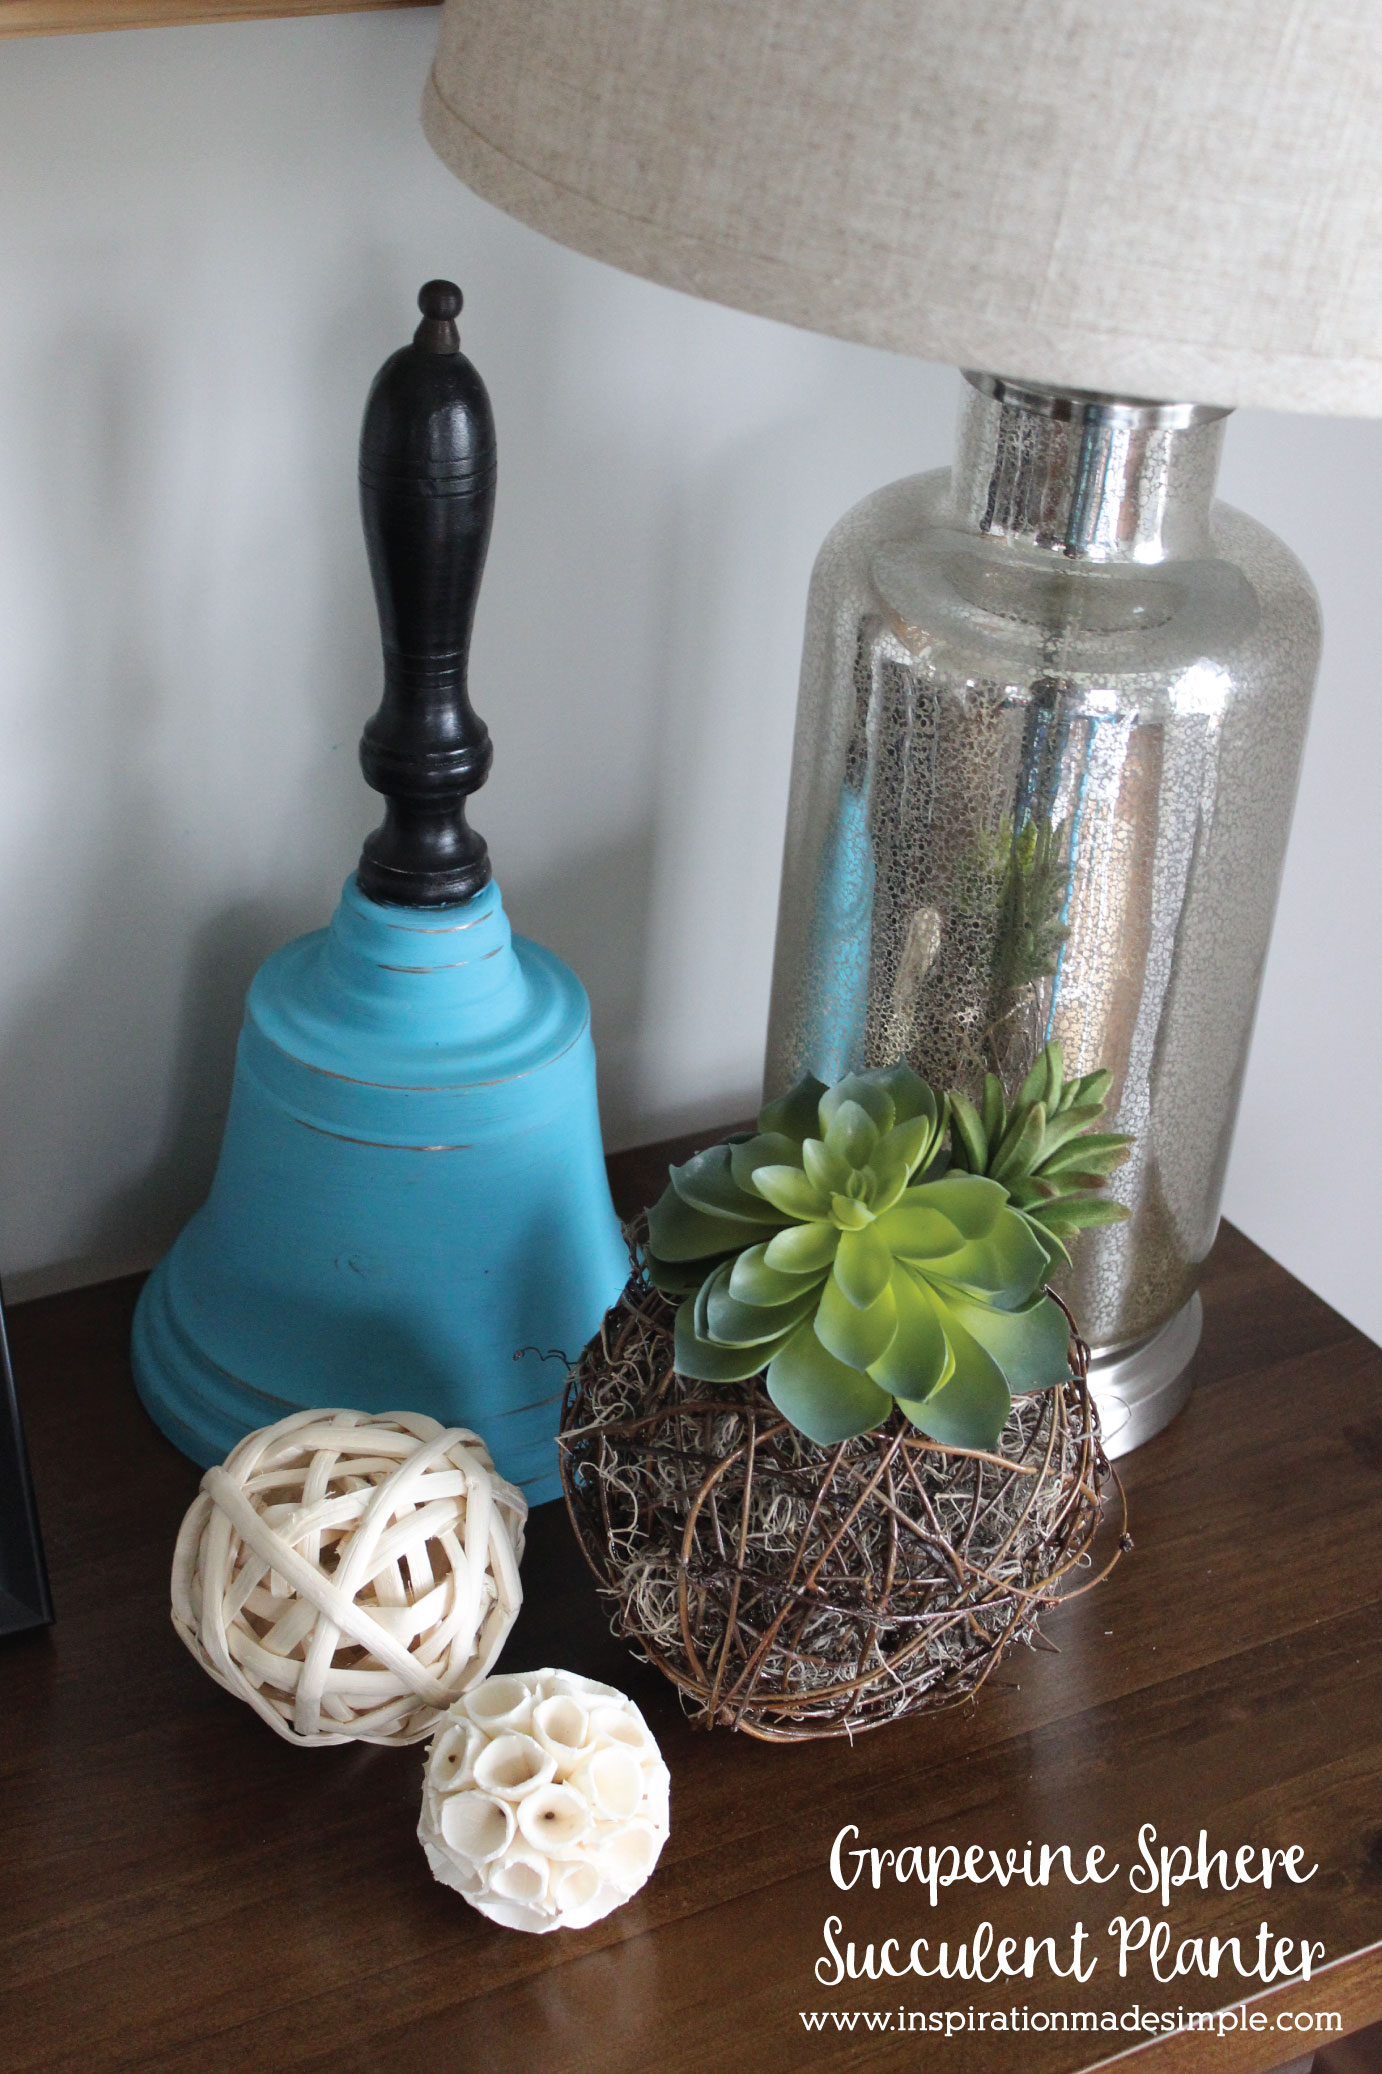 DIY Grapevine Sphere Succulent Planter - Easy to make!